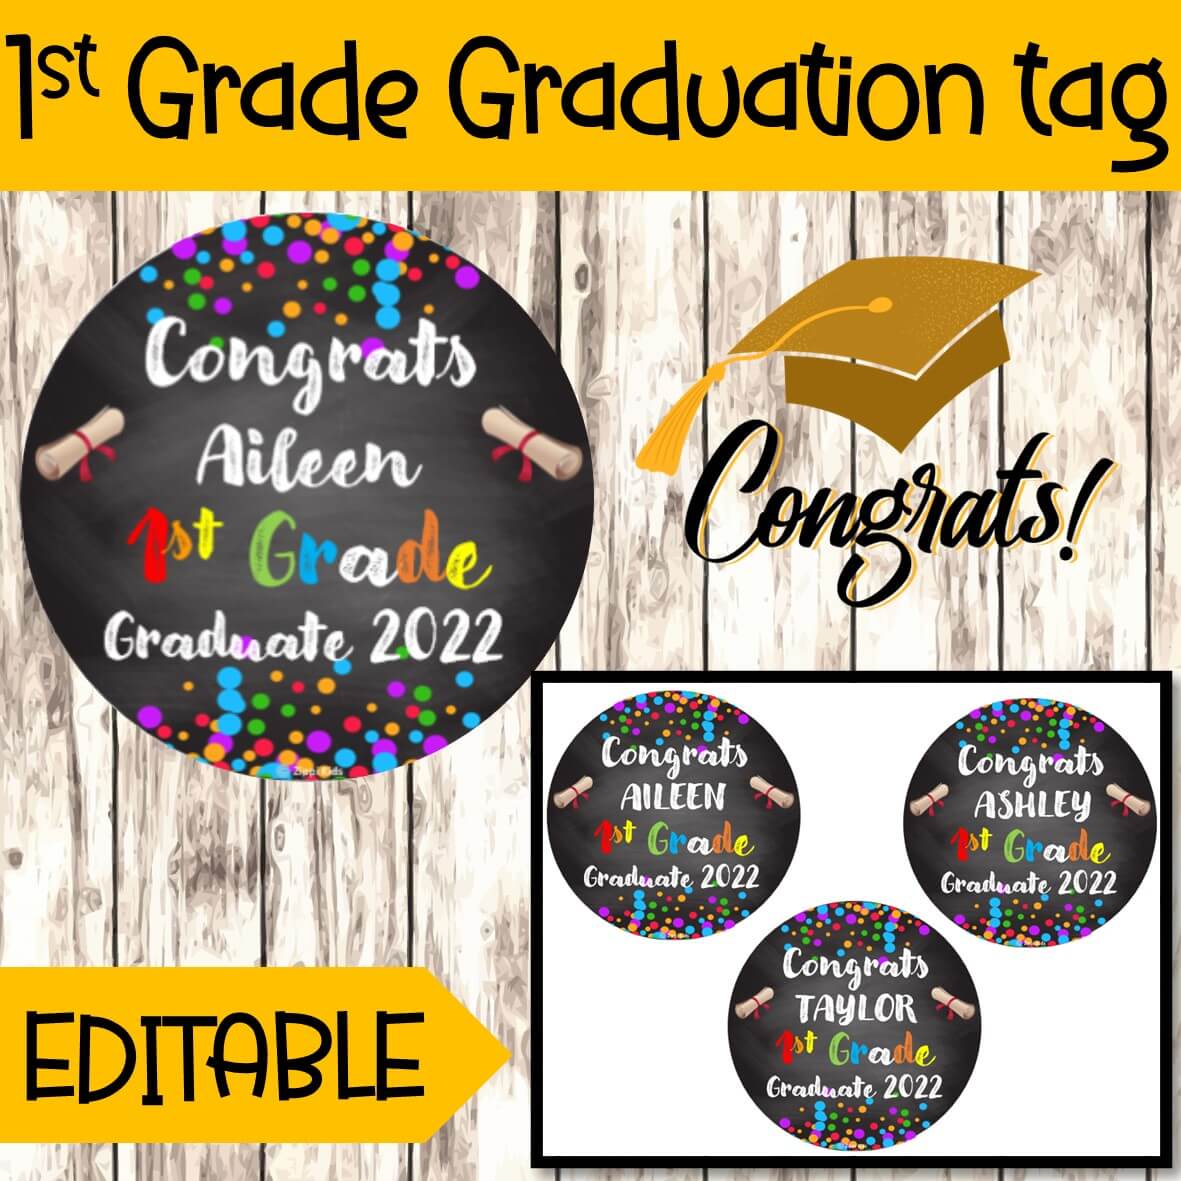 EDITABLE 1st Grade Graduation Gift Tags, Congrats 1st Grade Graduate tags